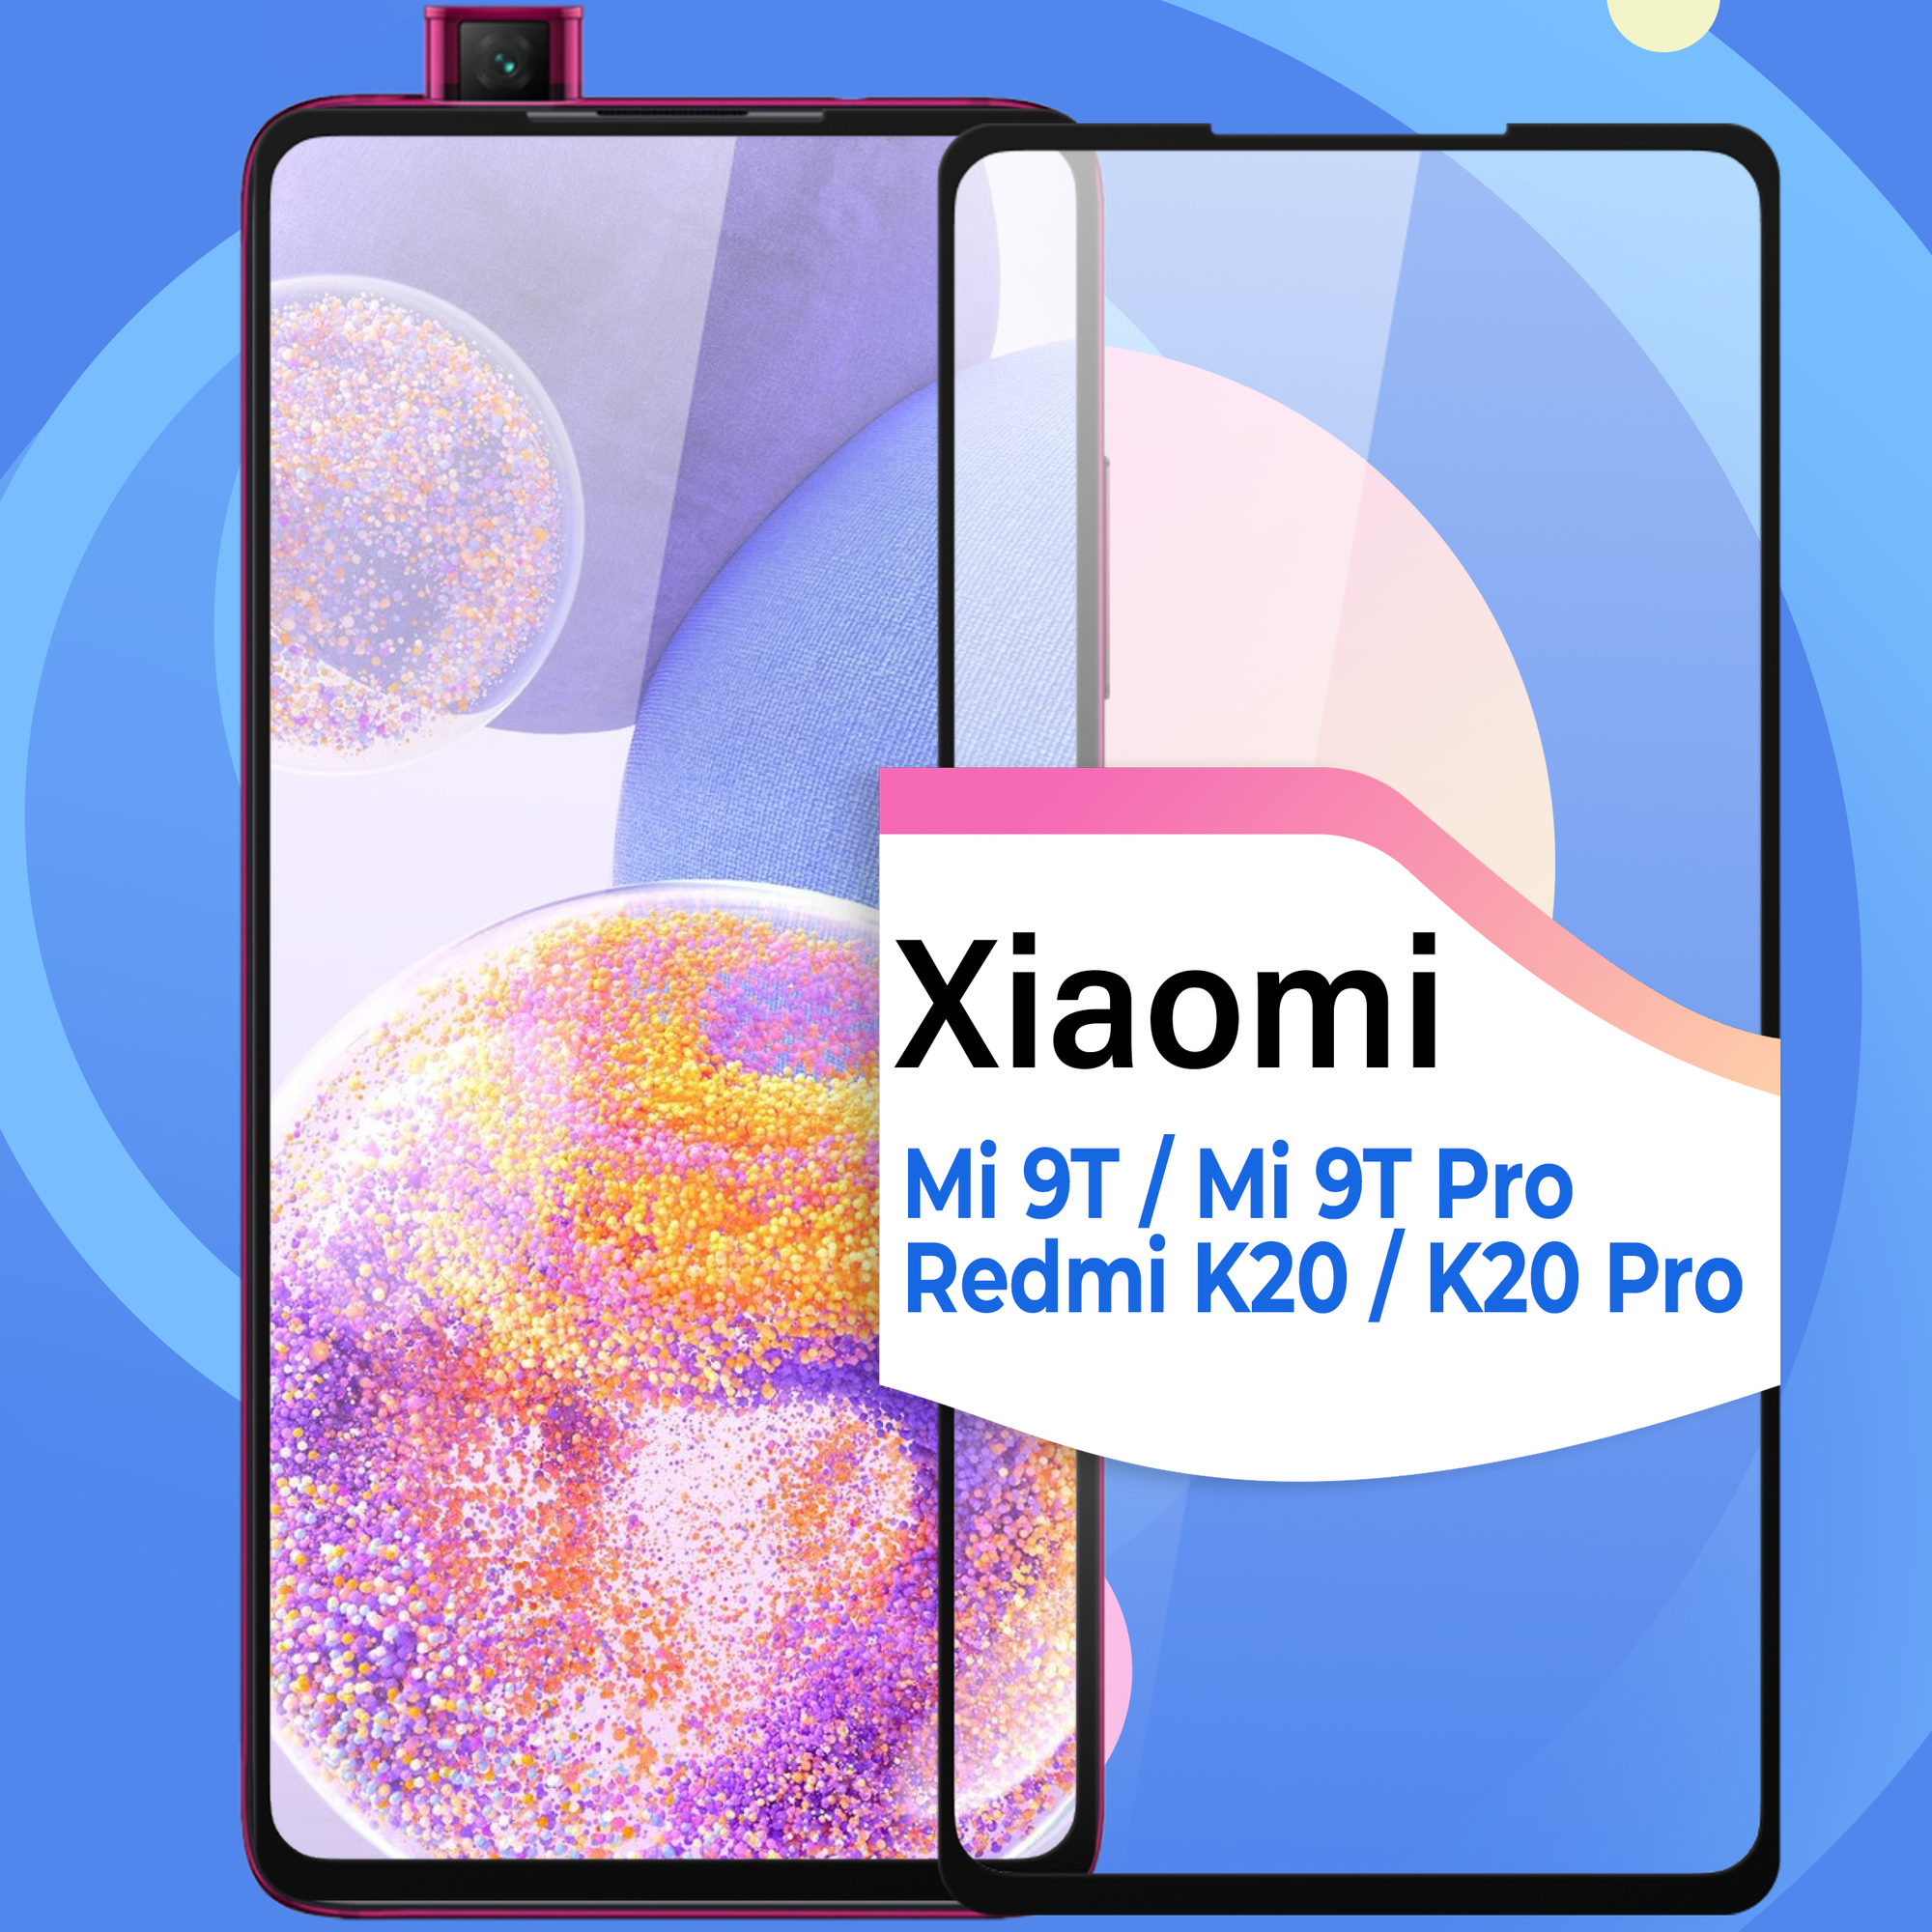 Защитное стекло на телефон Xiaomi Mi 9T, Mi 9T Pro, Redmi K20, K20 Pro / Противоударное олеофобное стекло для смартфона Сяоми Ми 9Т, Ми 9Т Про, Редми К20, К20 Про